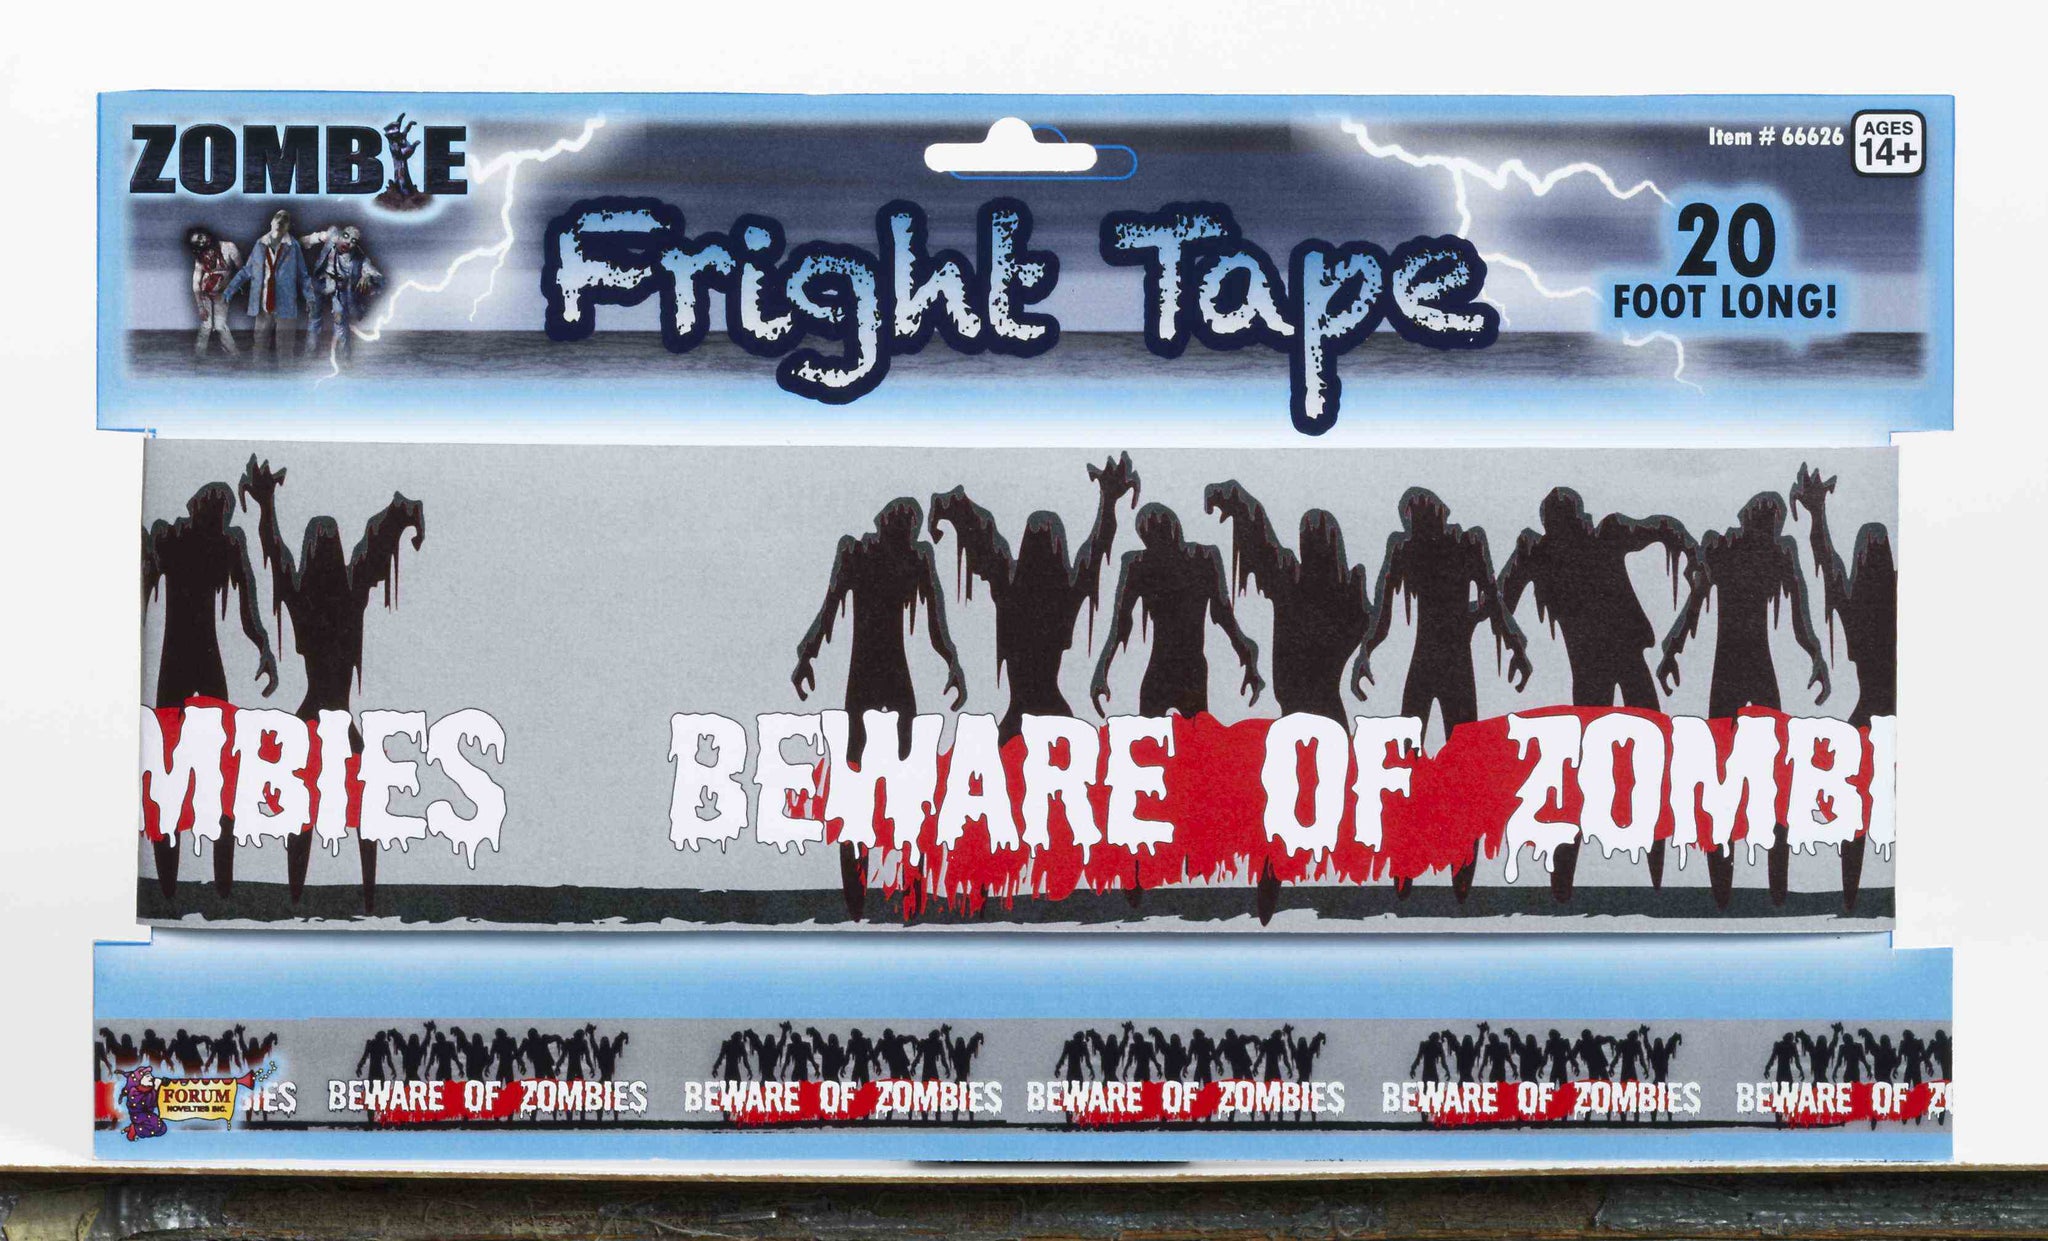 Beware of Zombies 20 foot long